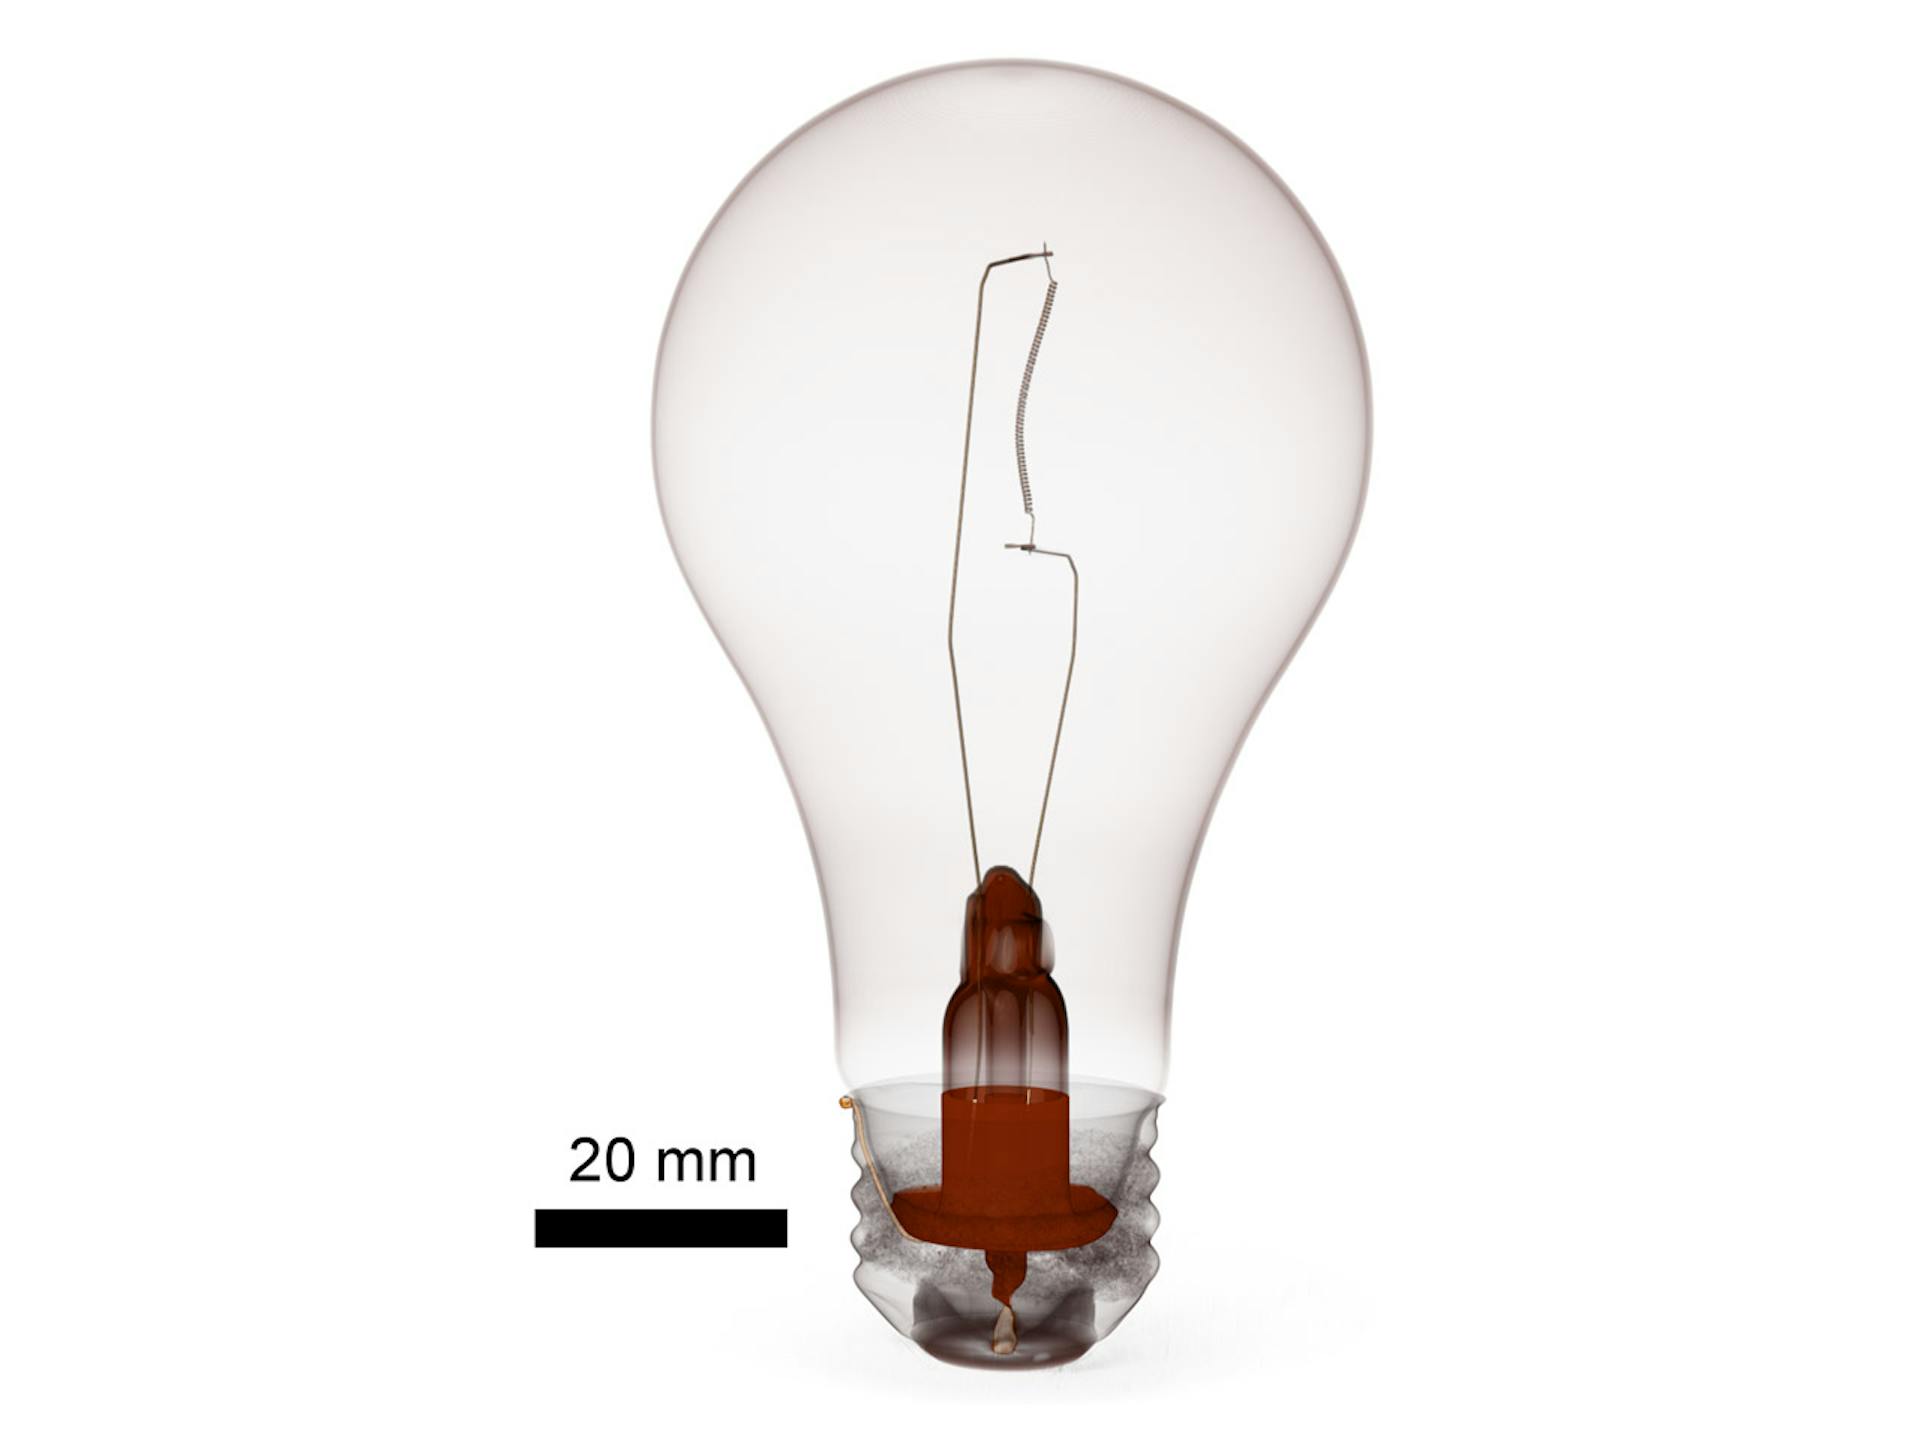 3D rendering of a light bulb.